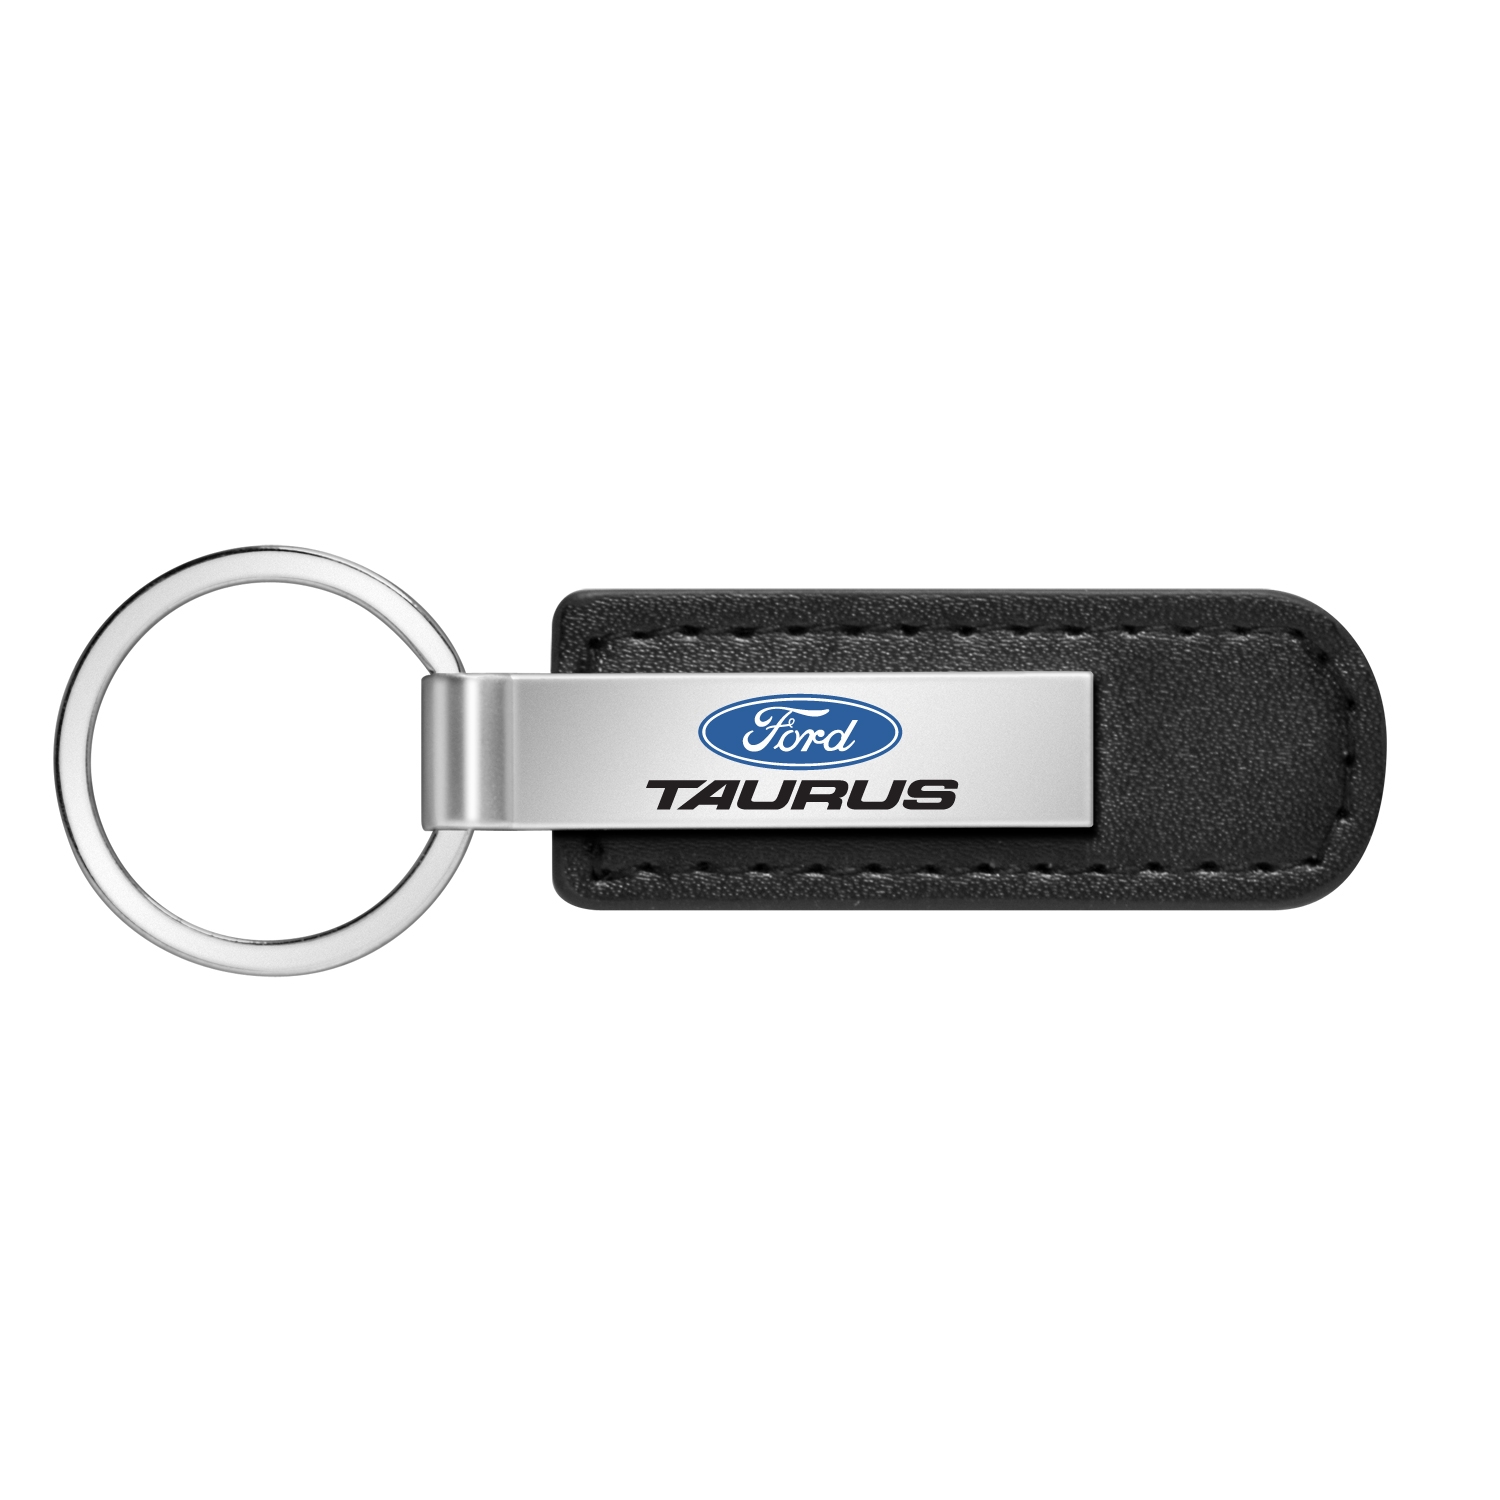 Ford Taurus Black Leather Strap Key Chain